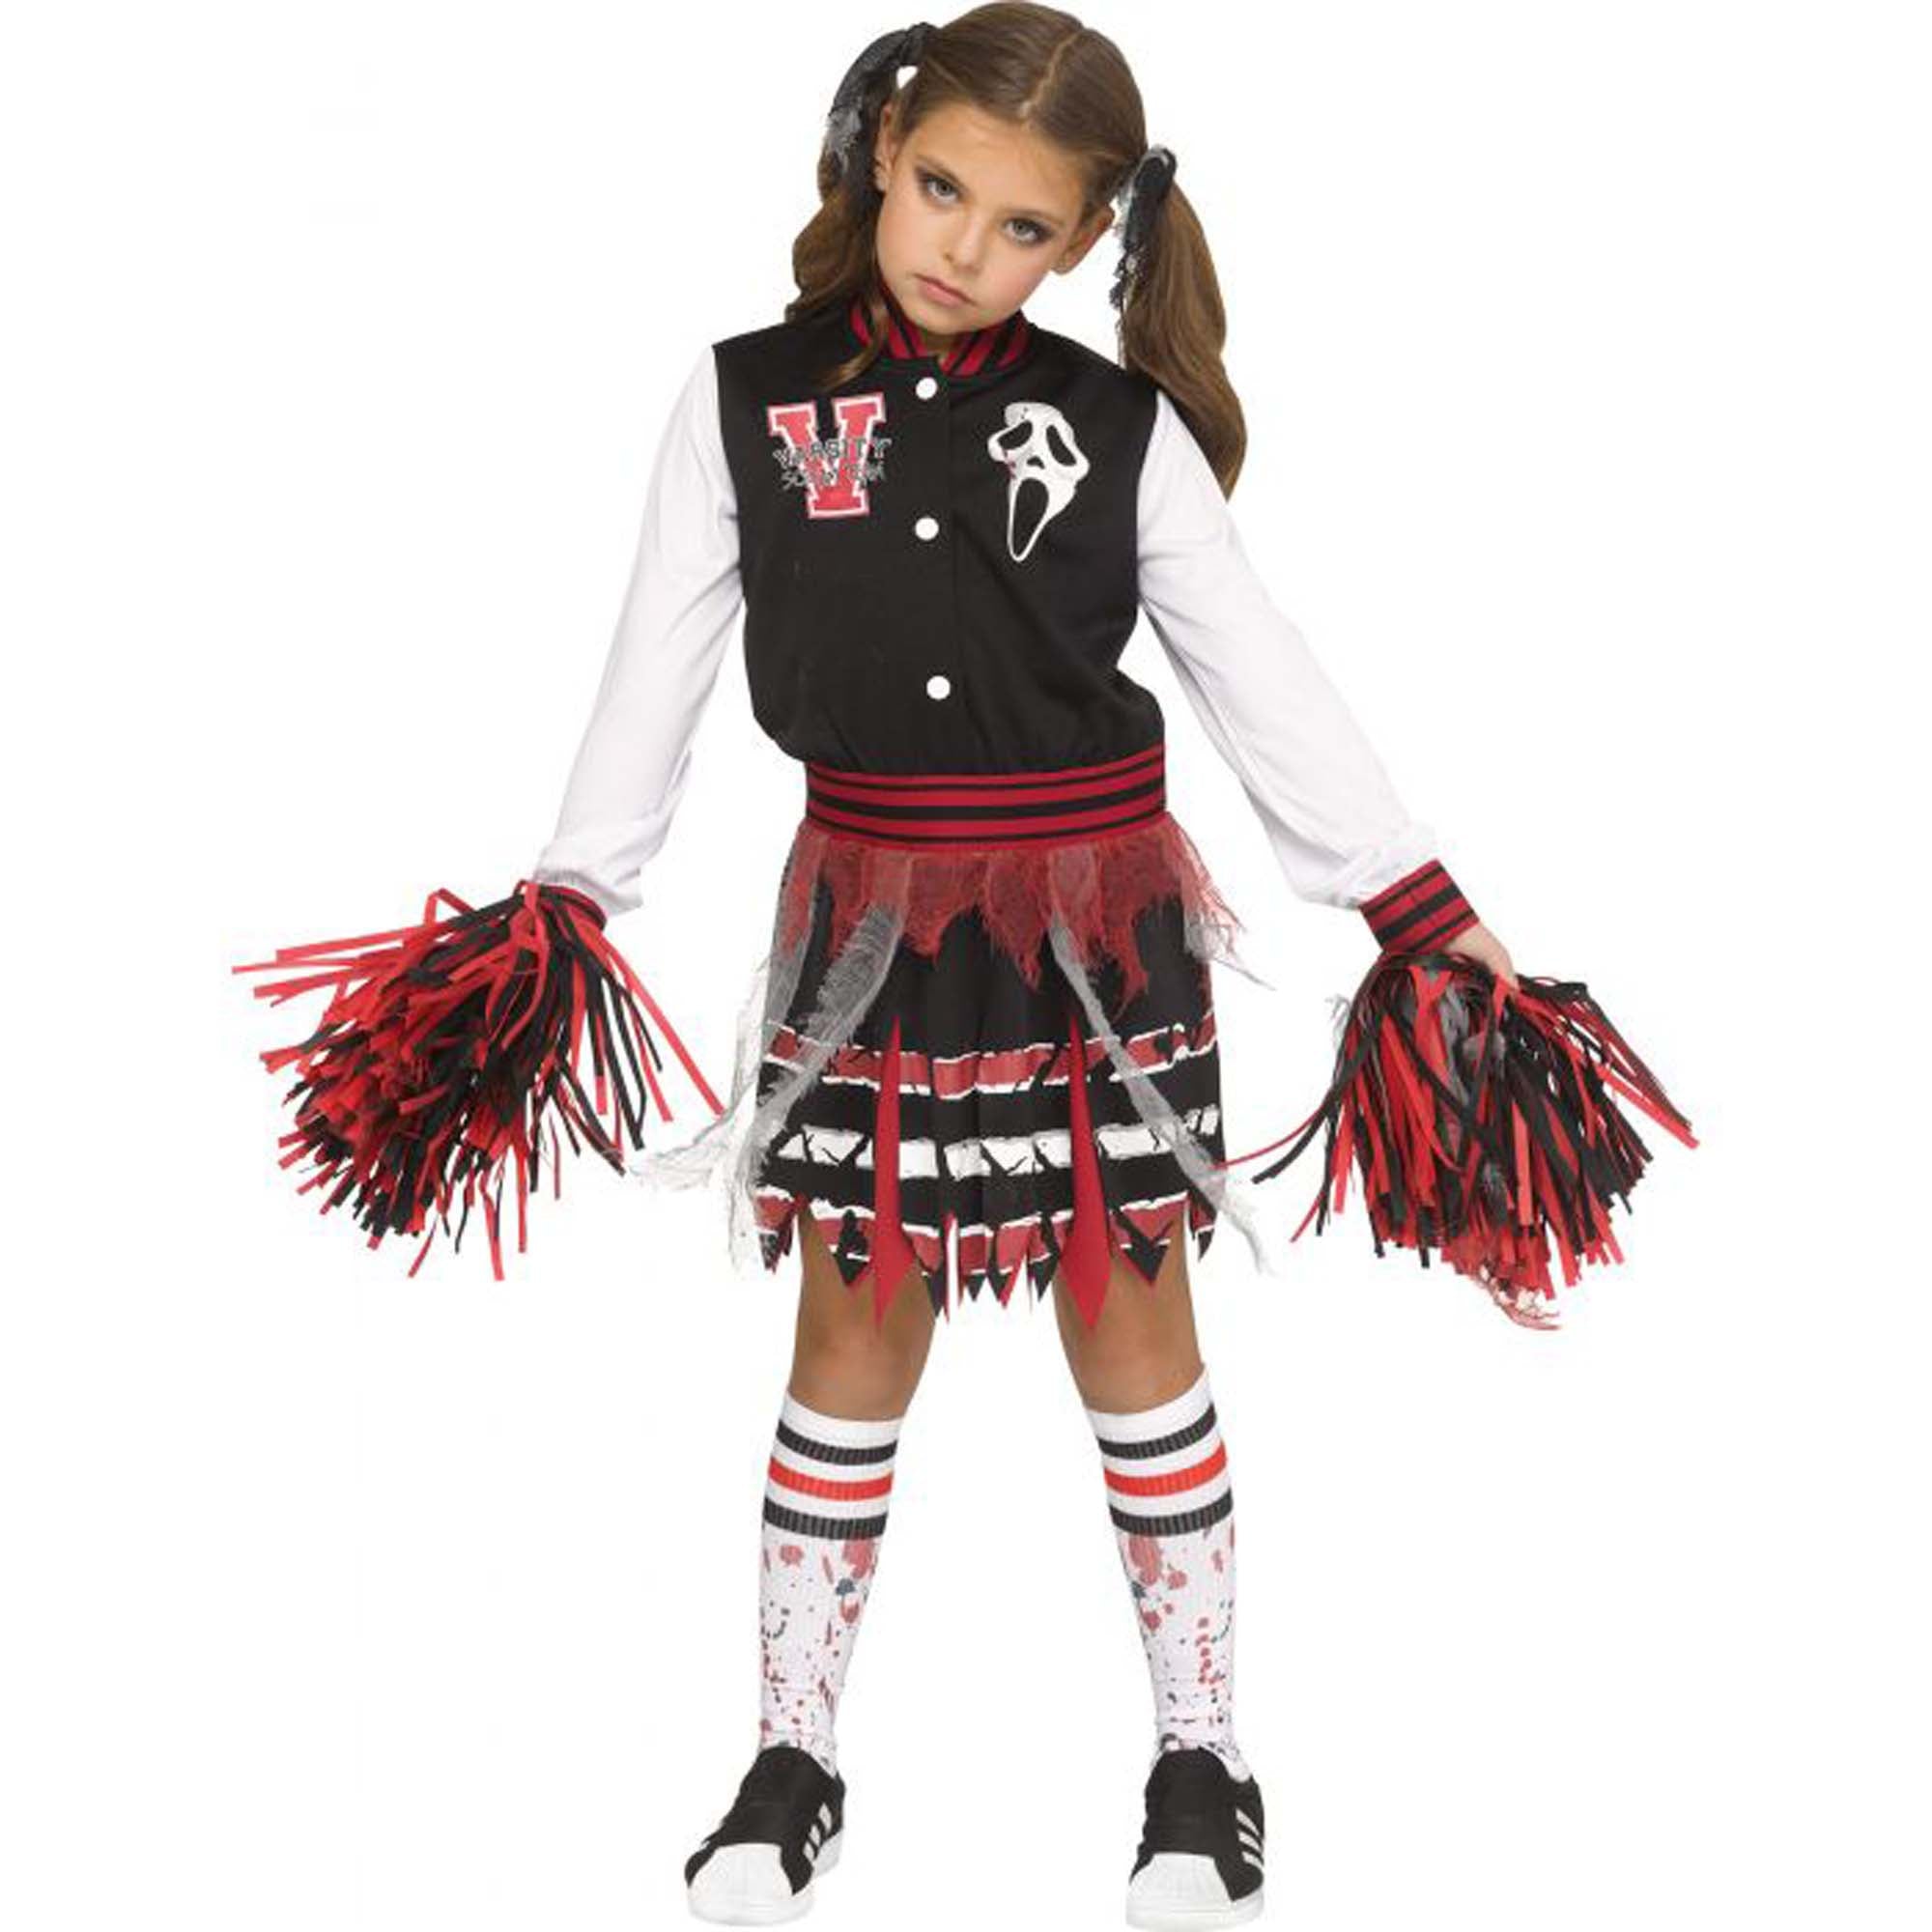 Cheerleader costume. The coolest